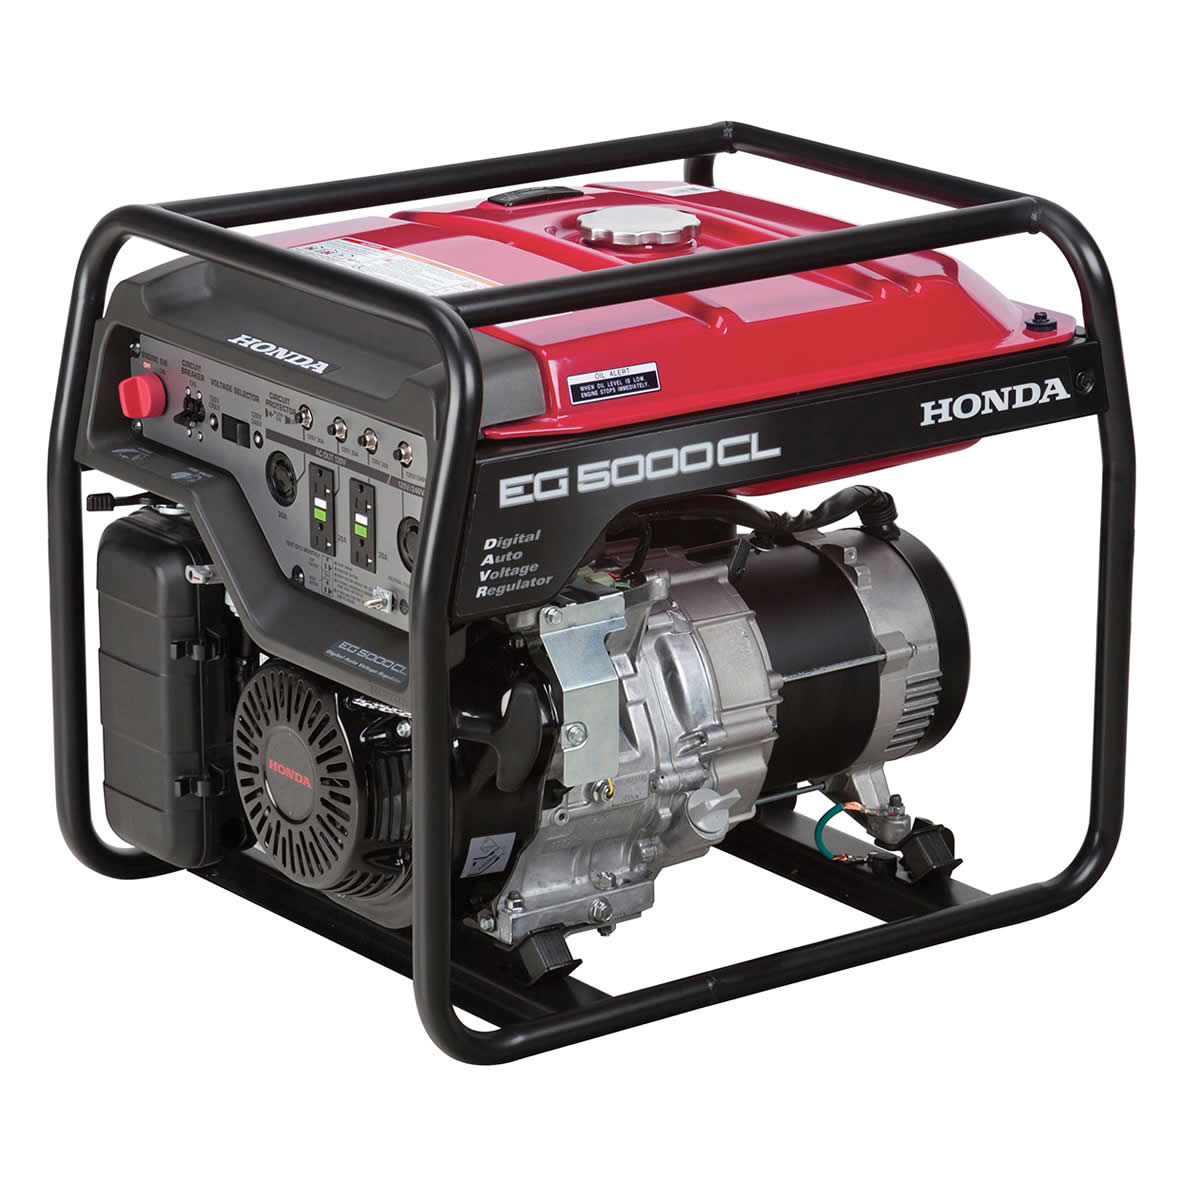 National Indoor RV Centers-blog-RV generators-portable generator for motorhome use